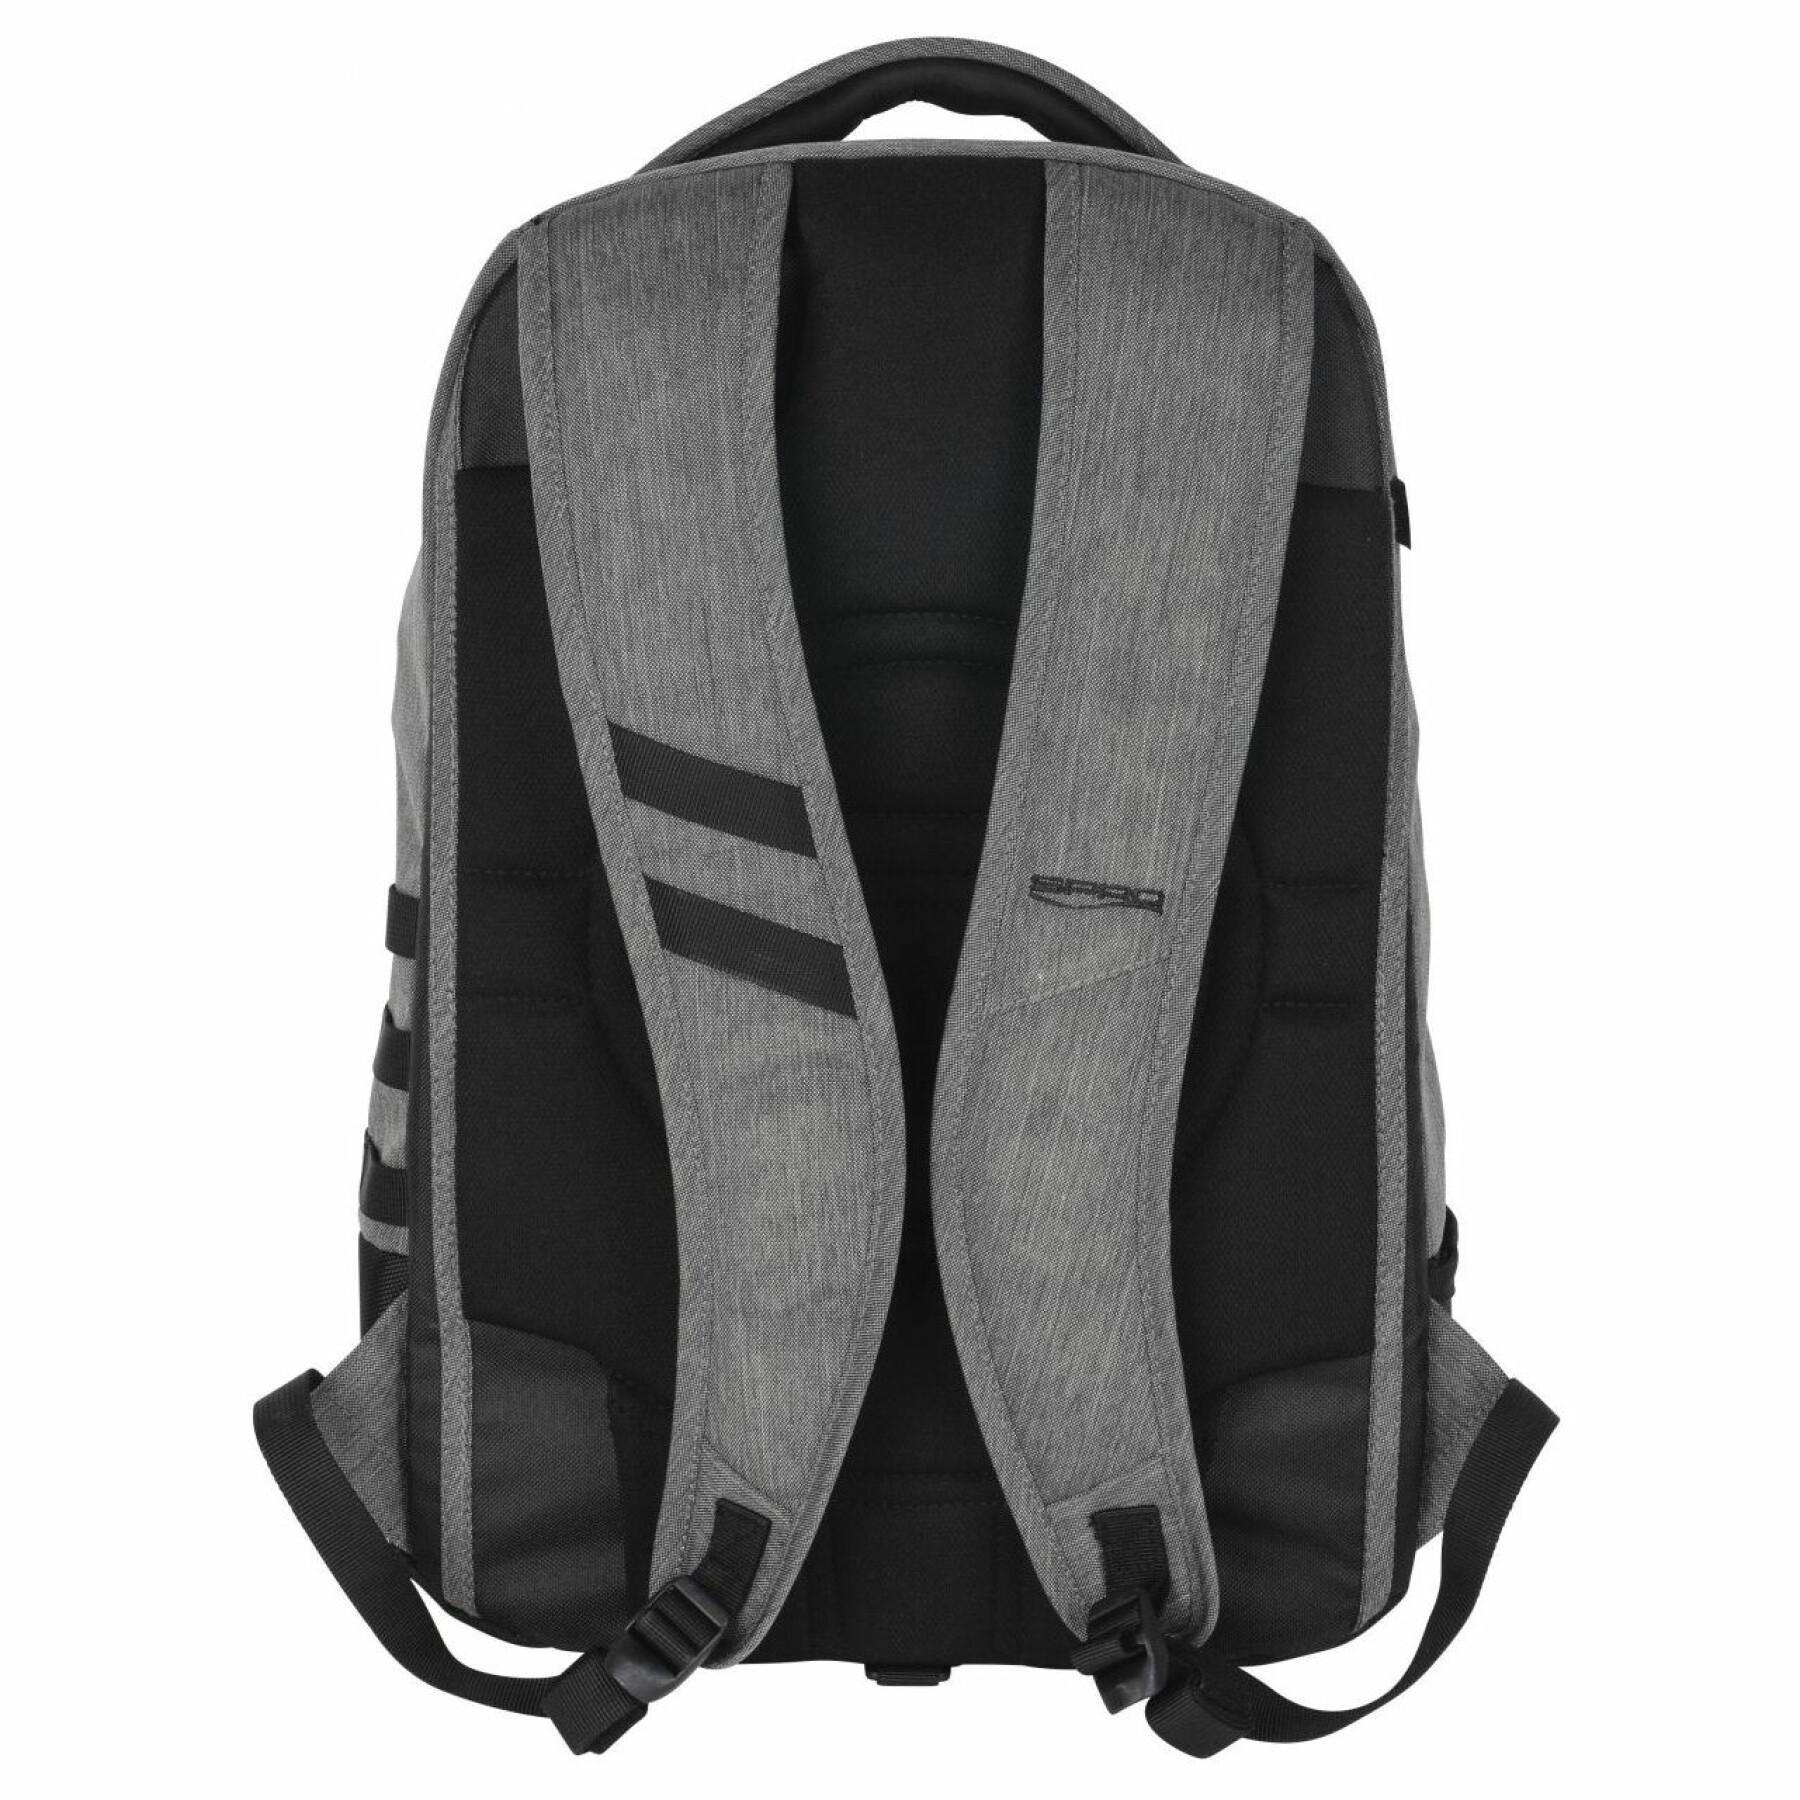 Backpack Spro